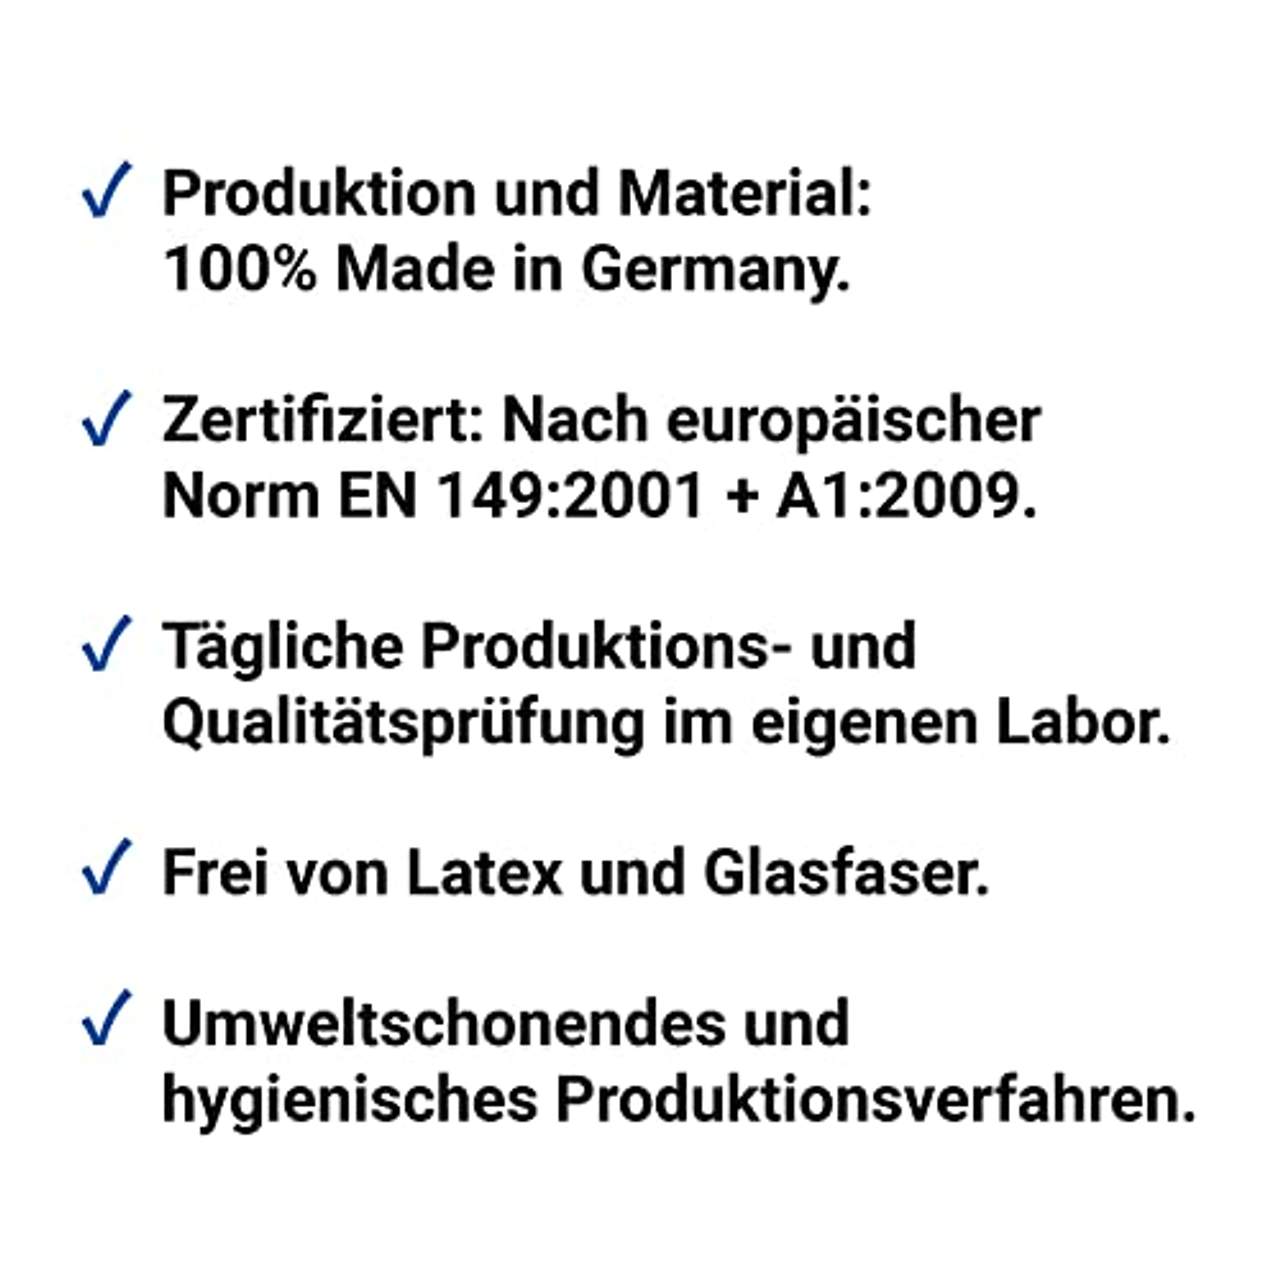 elasto 10x FFP2 Masken CE Zertifiziert  Made in Germany - hellgrün